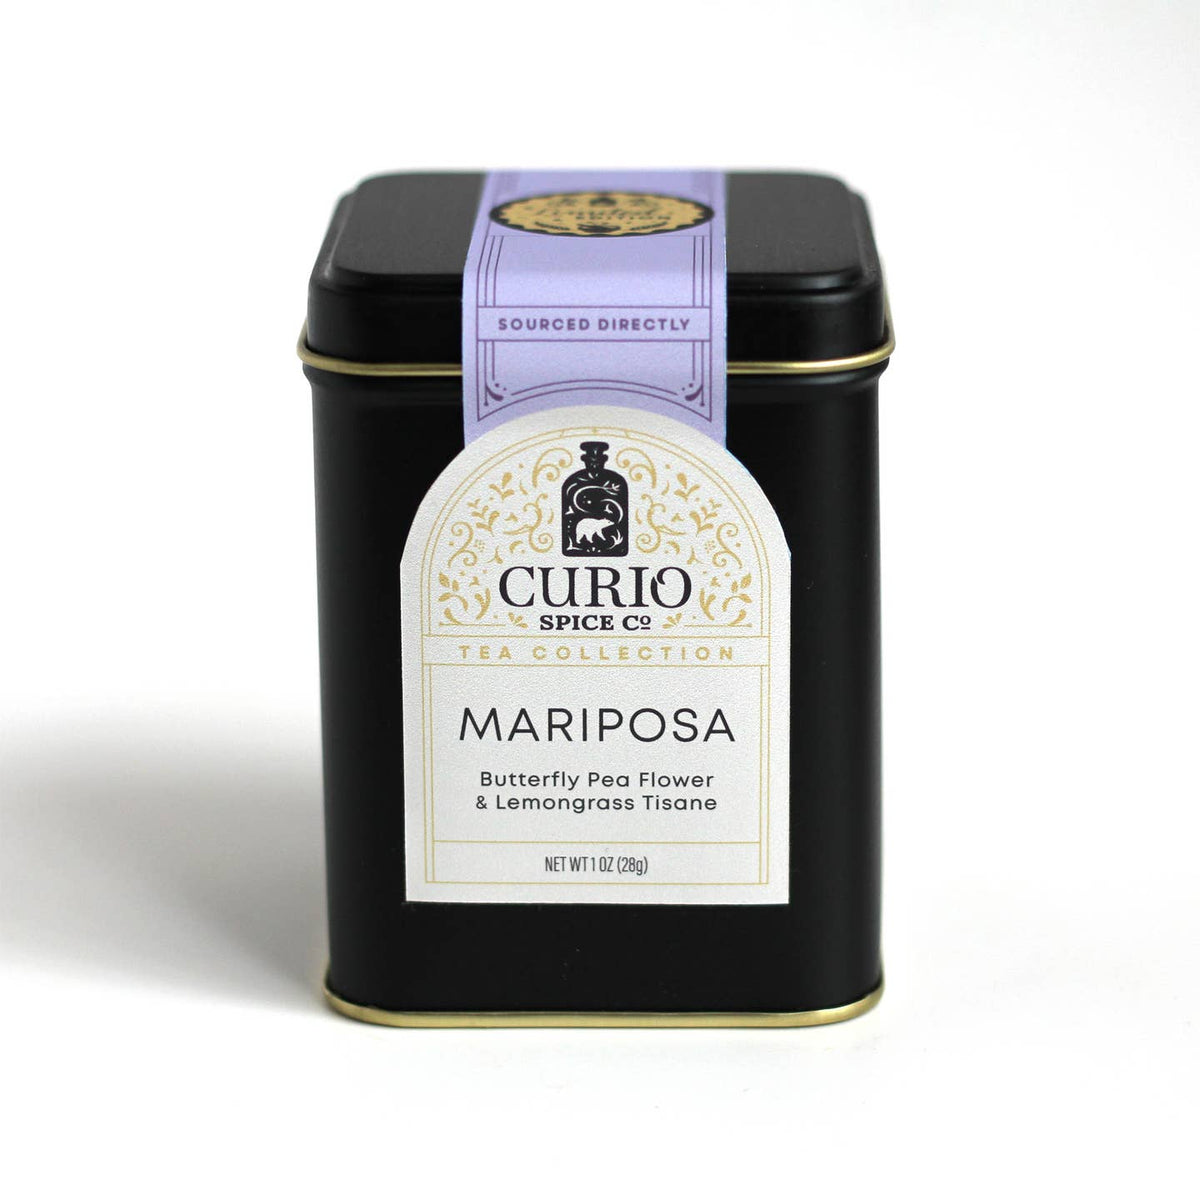 Curio Spice Co Mariposa Tea